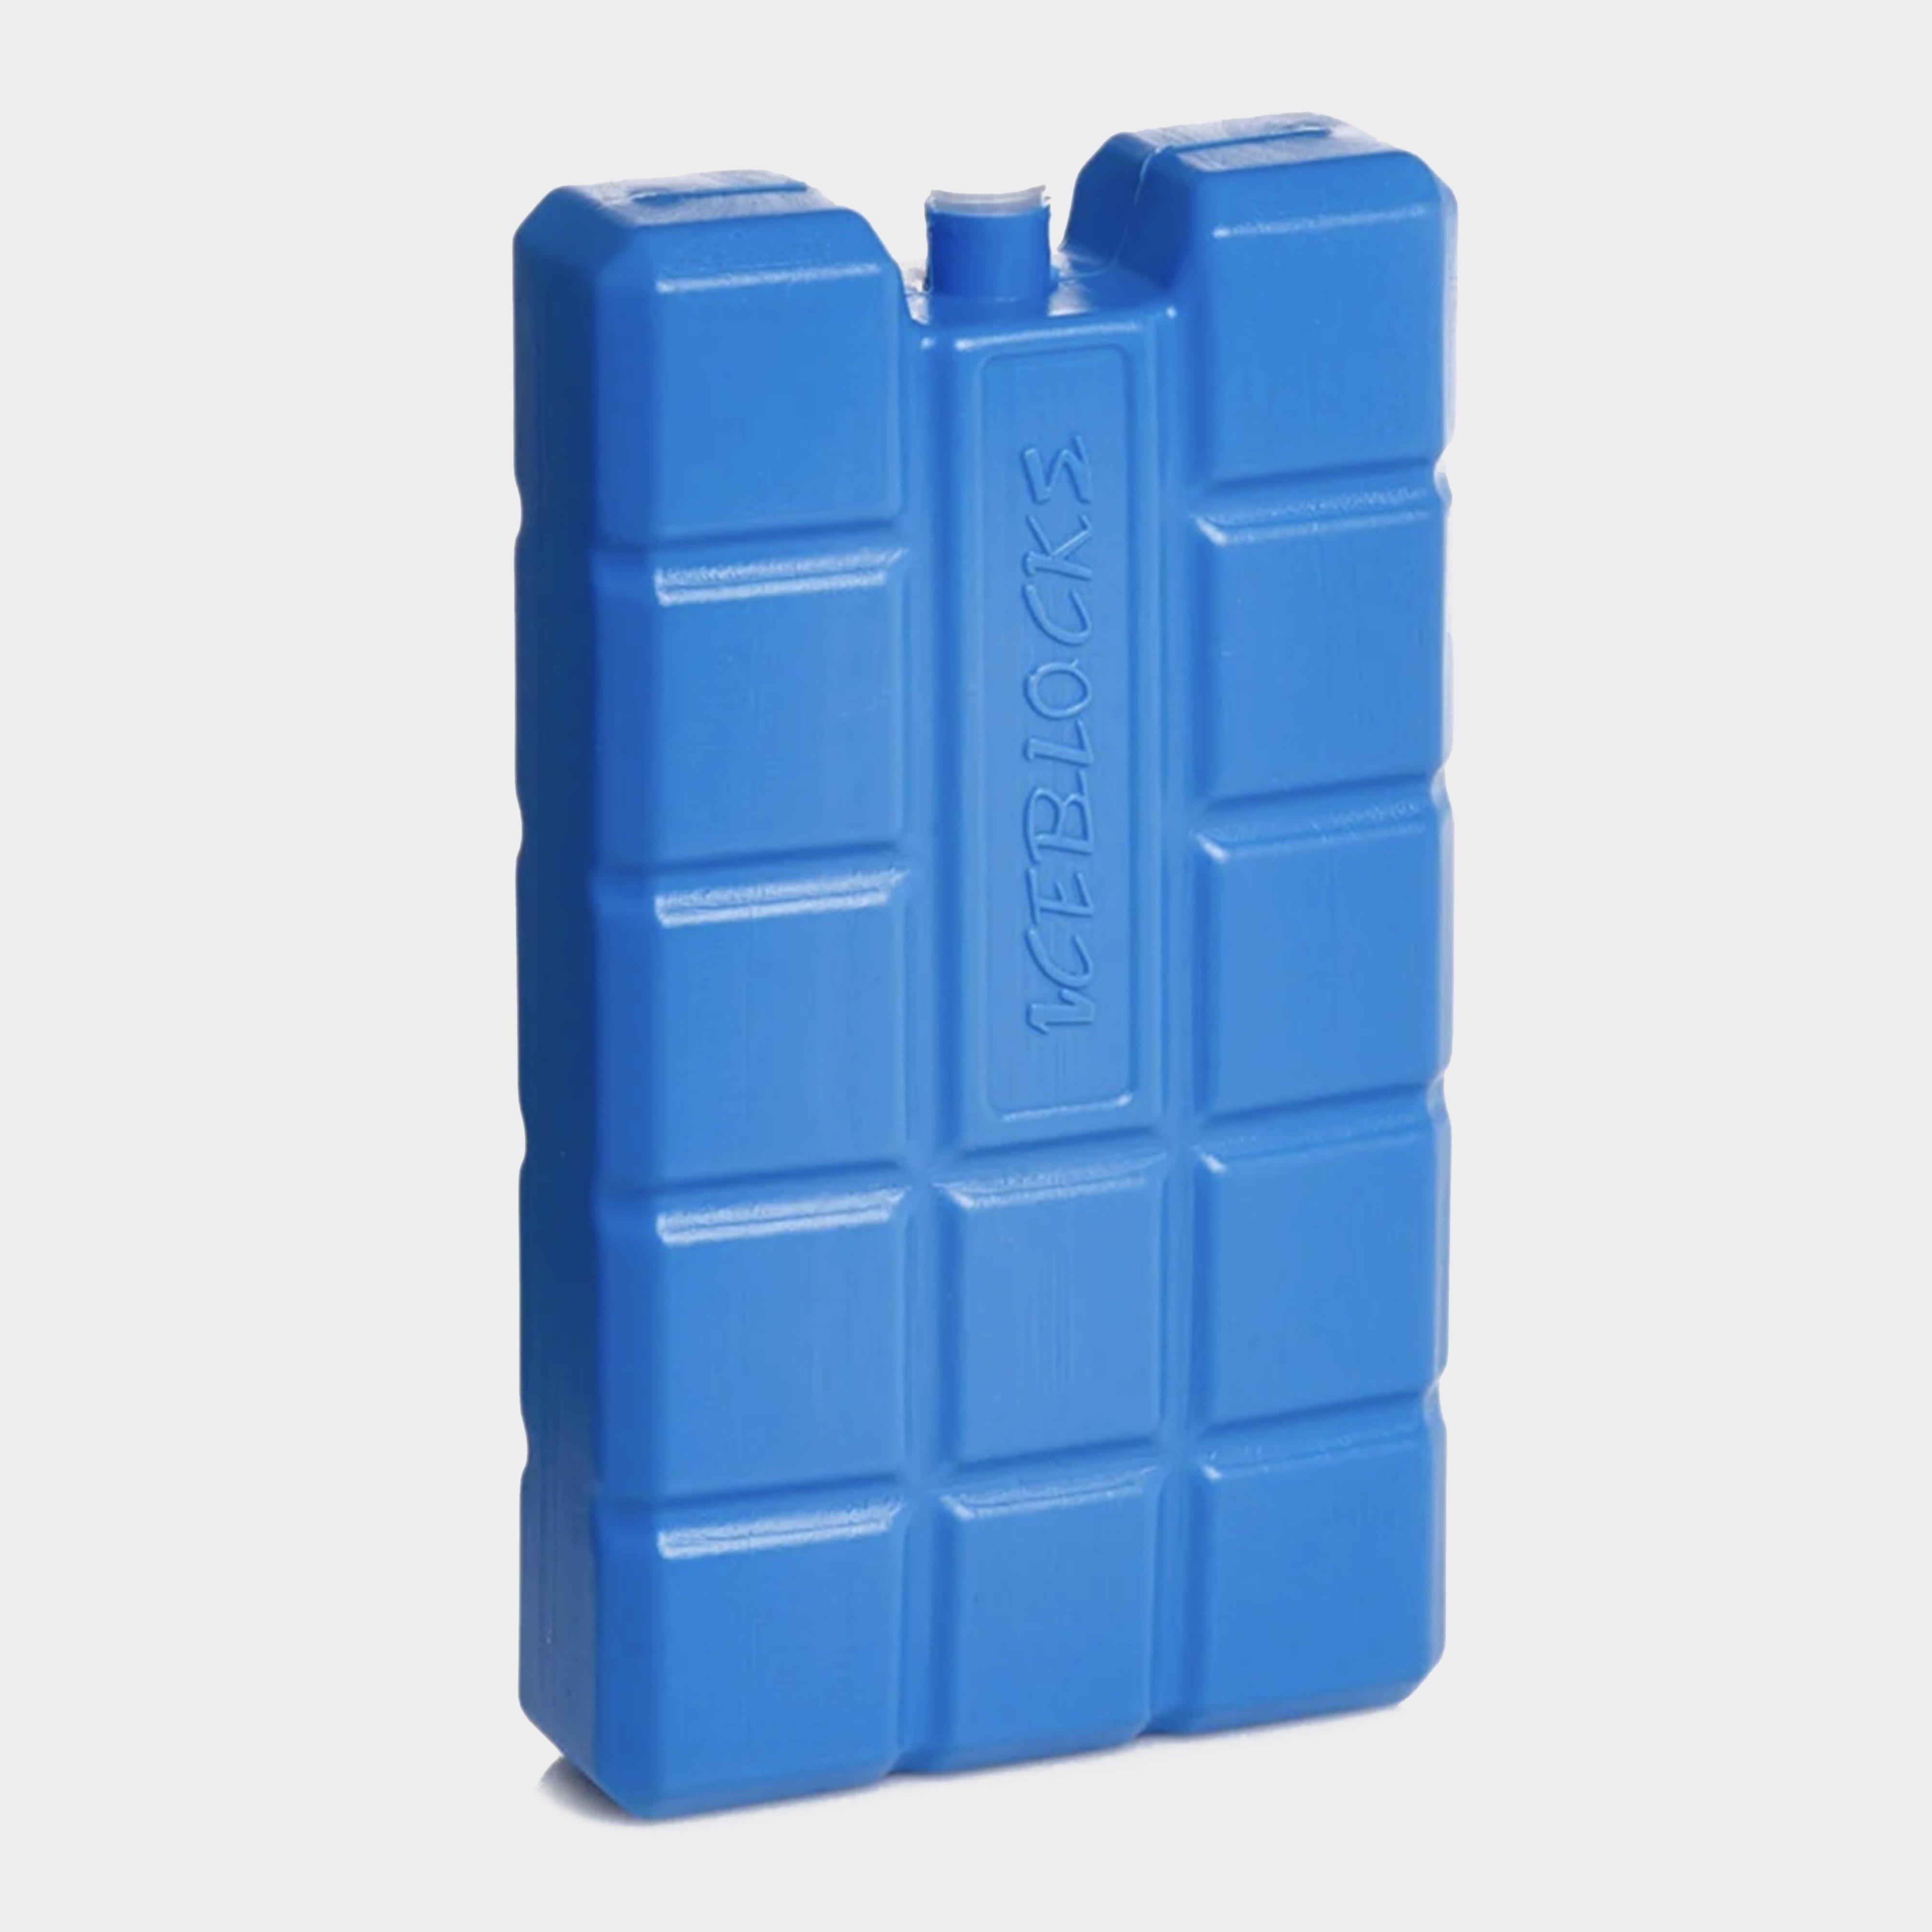 Connabride Freez Board Ice Packs 2X 400G - Blue, Blue